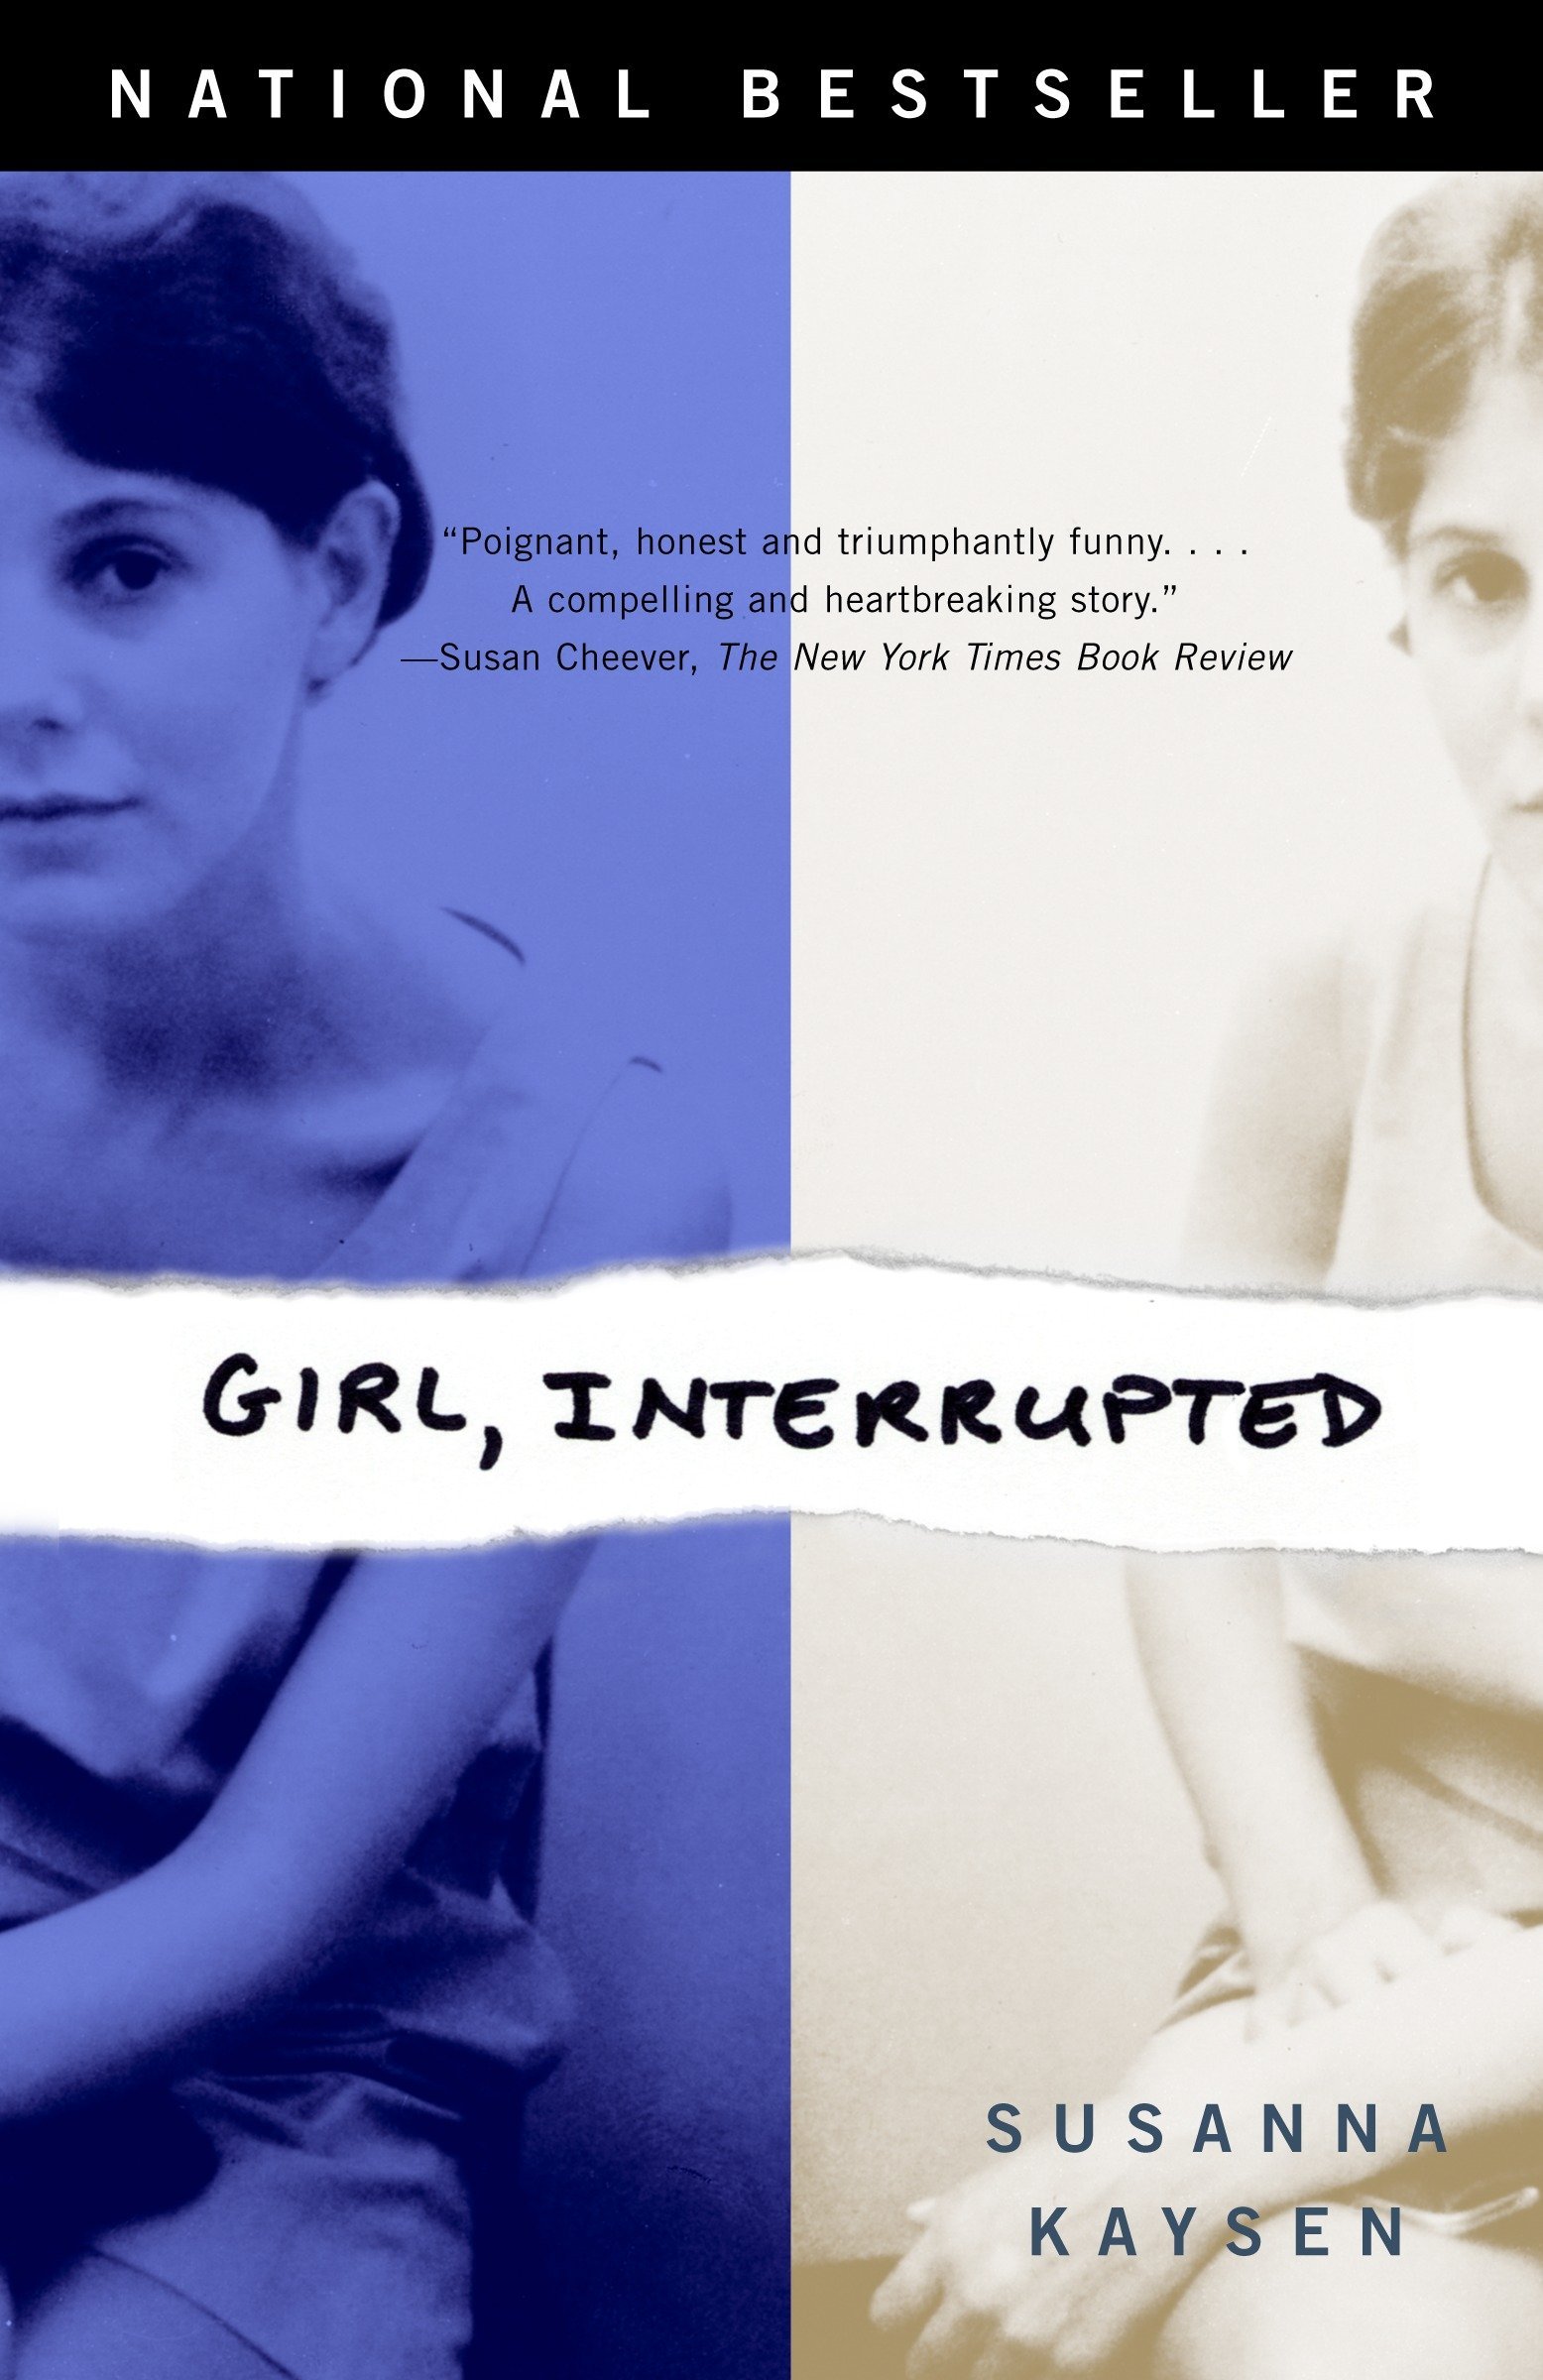 'Girl, Interrupted' by Susanna Kaysen